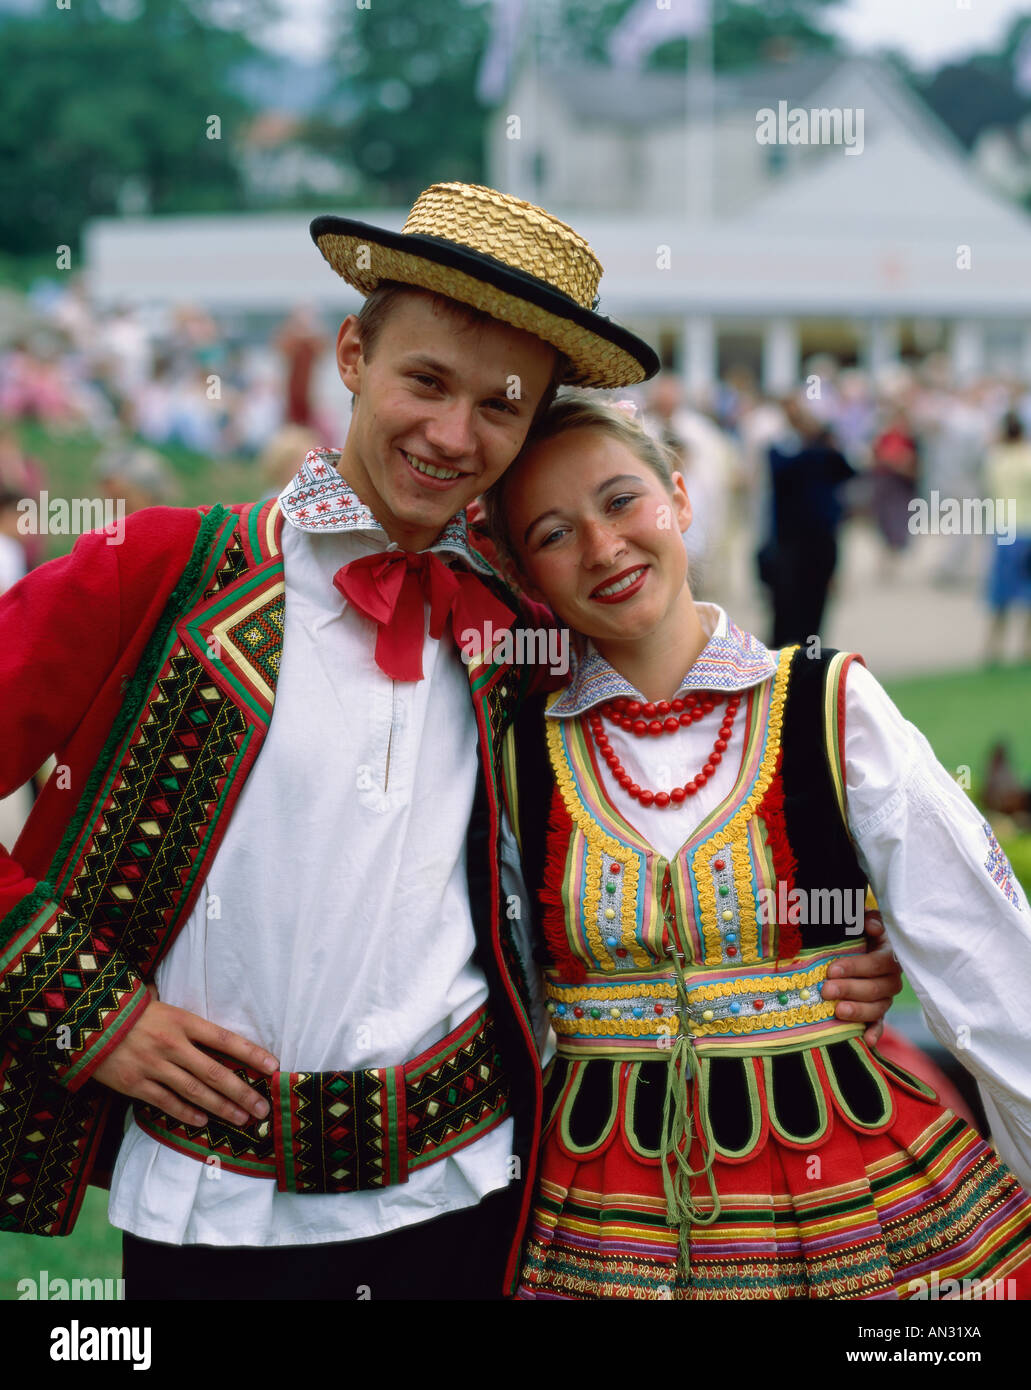 https://c8.alamy.com/comp/AN31XA/man-and-woman-dressed-in-traditional-polish-costume-warsaw-poland-AN31XA.jpg